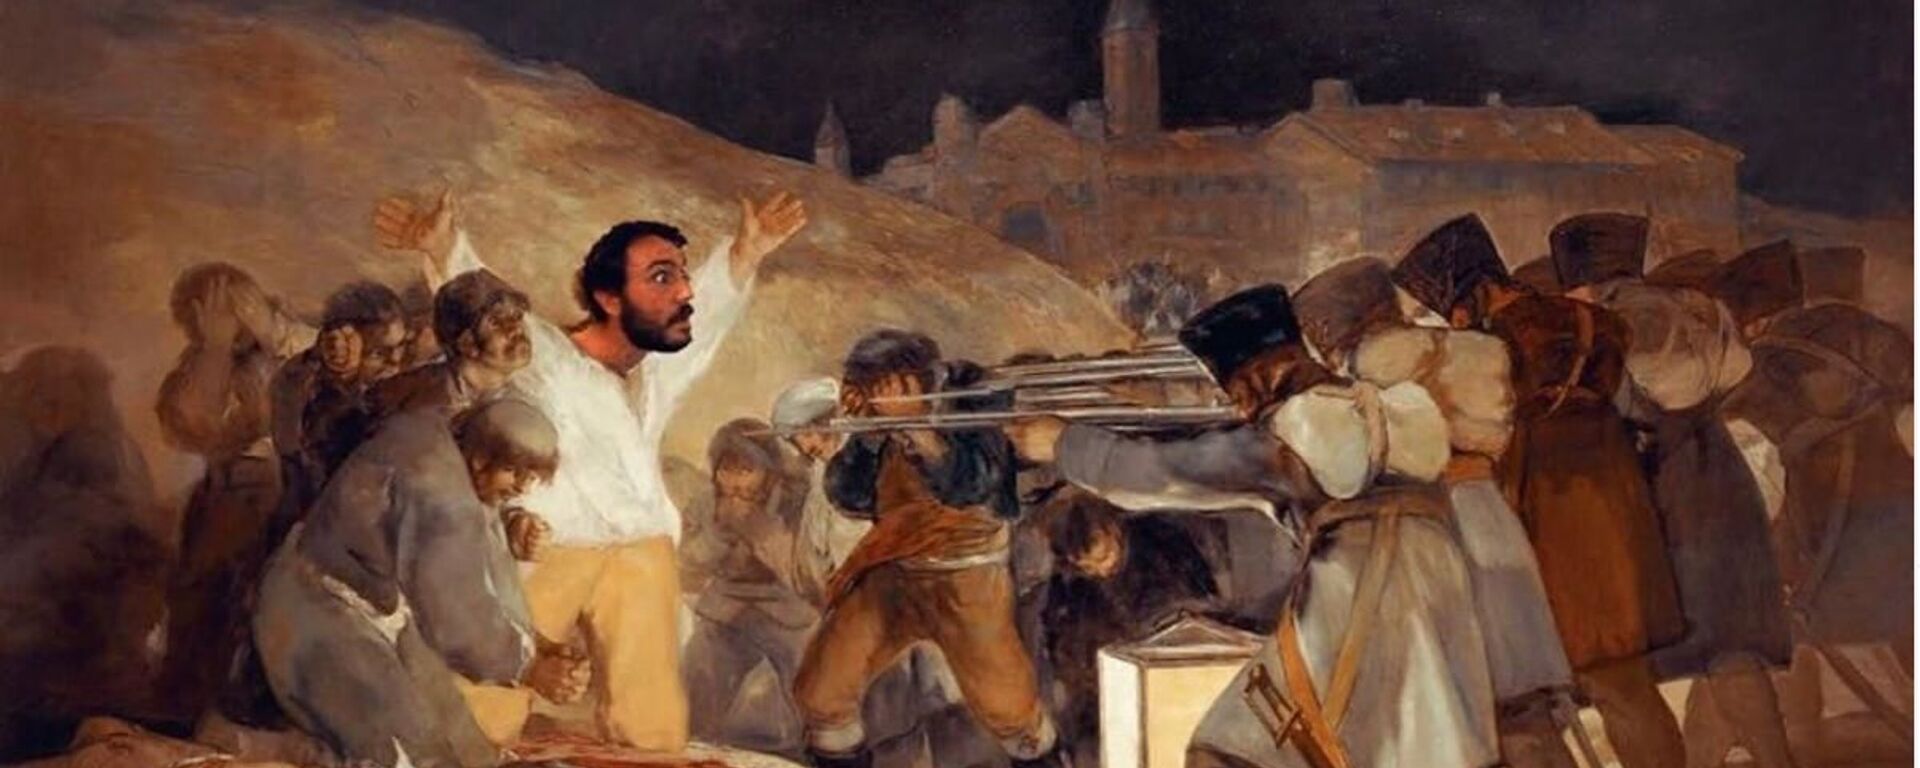 Paco Pajuelo, profesor de Historia del IES Siglo XXI de Sevilla, en el cuadro de Francisco Goya - Sputnik Mundo, 1920, 05.06.2020